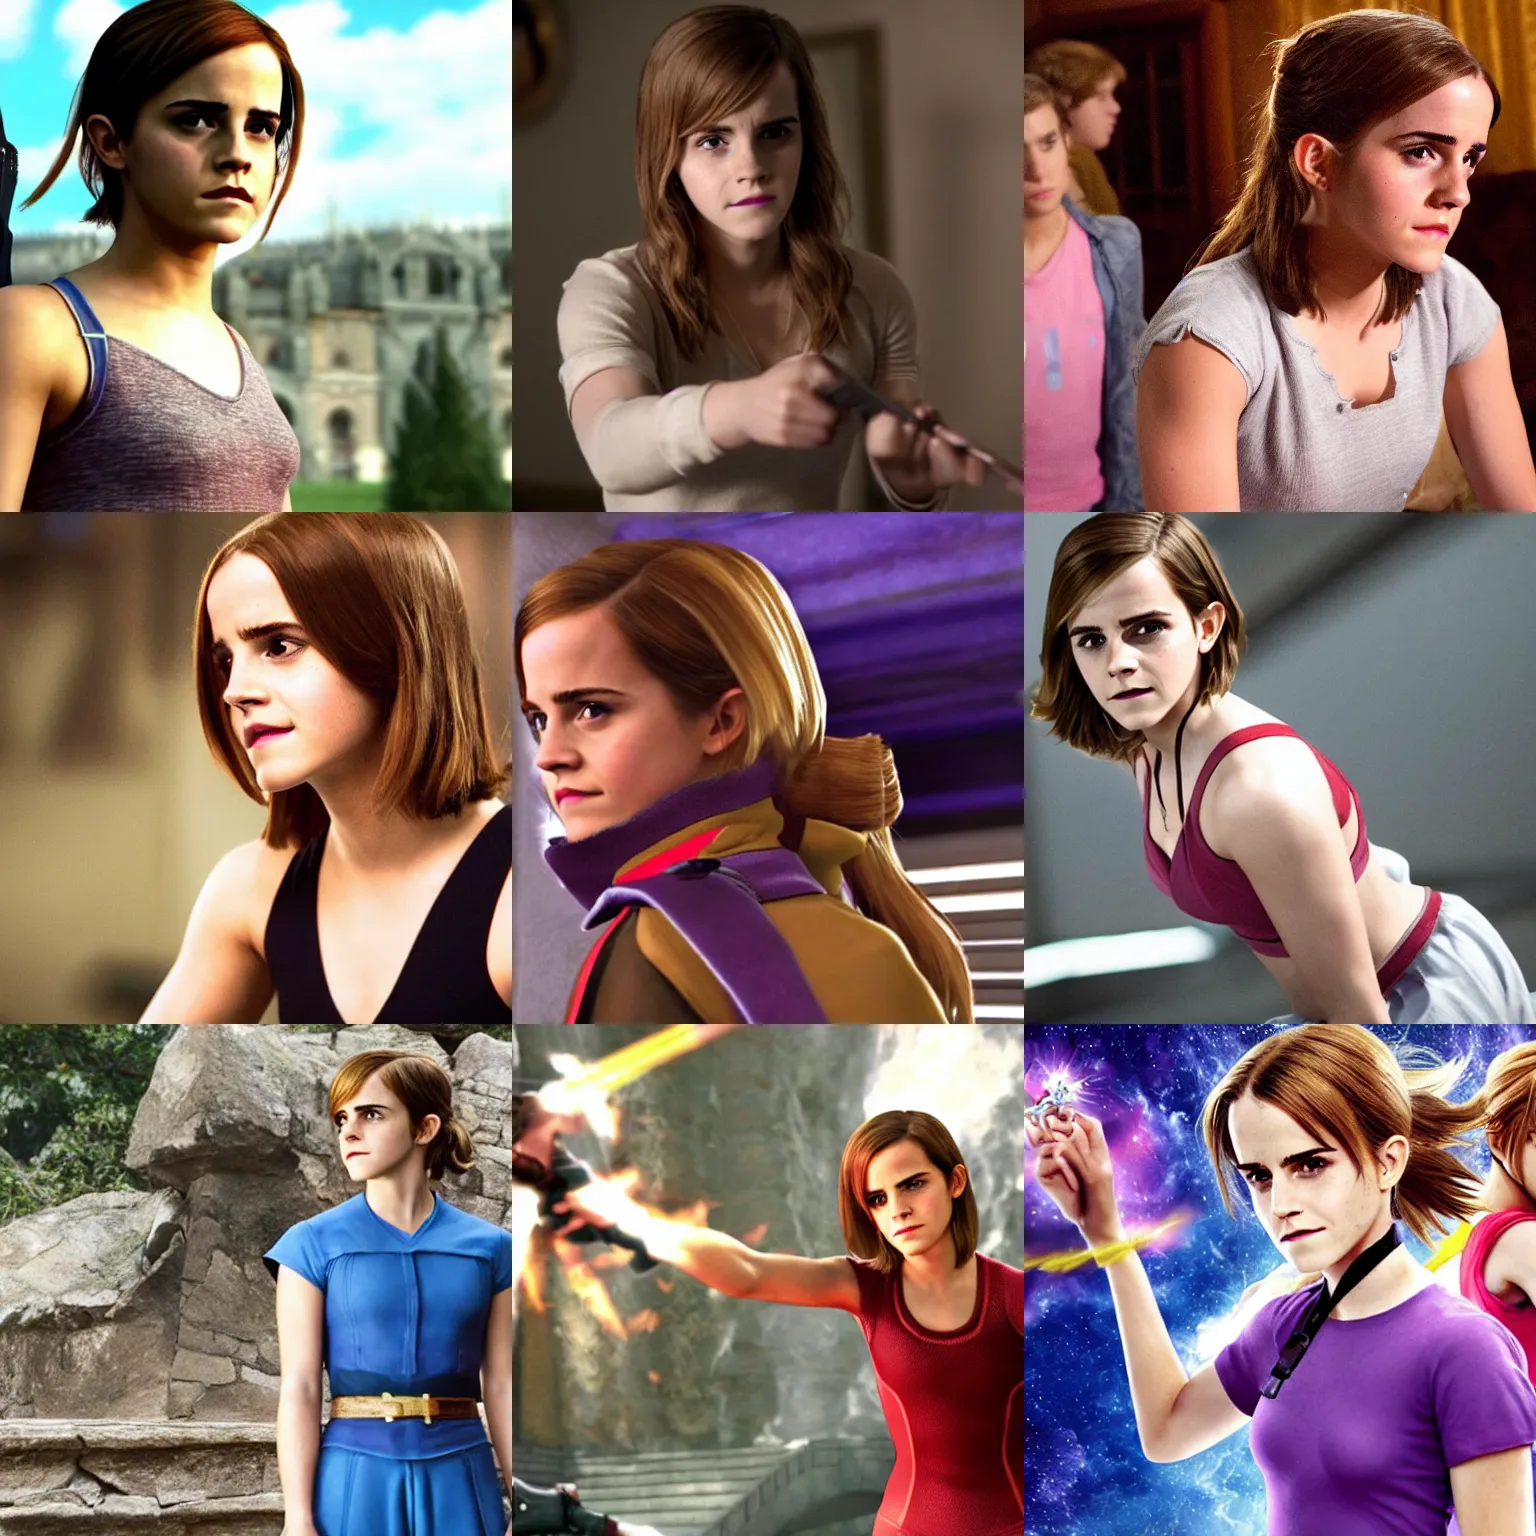 Prompt: Movie still of Emma Watson in Super Smash Bros